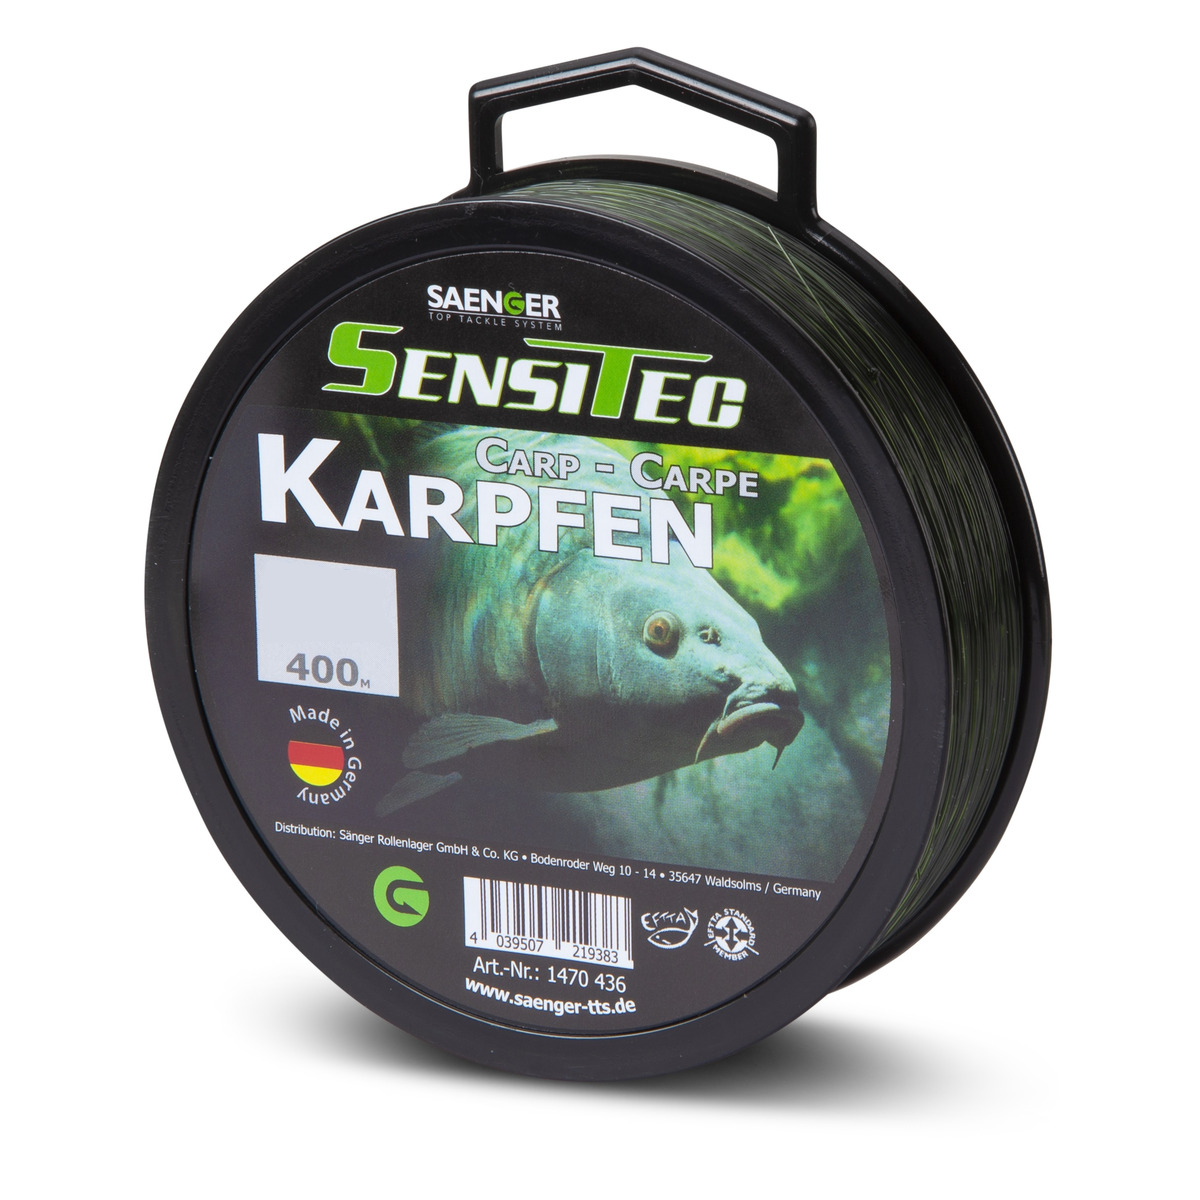 Sensitec Karpfen camou green 400 m - 0.36 mm